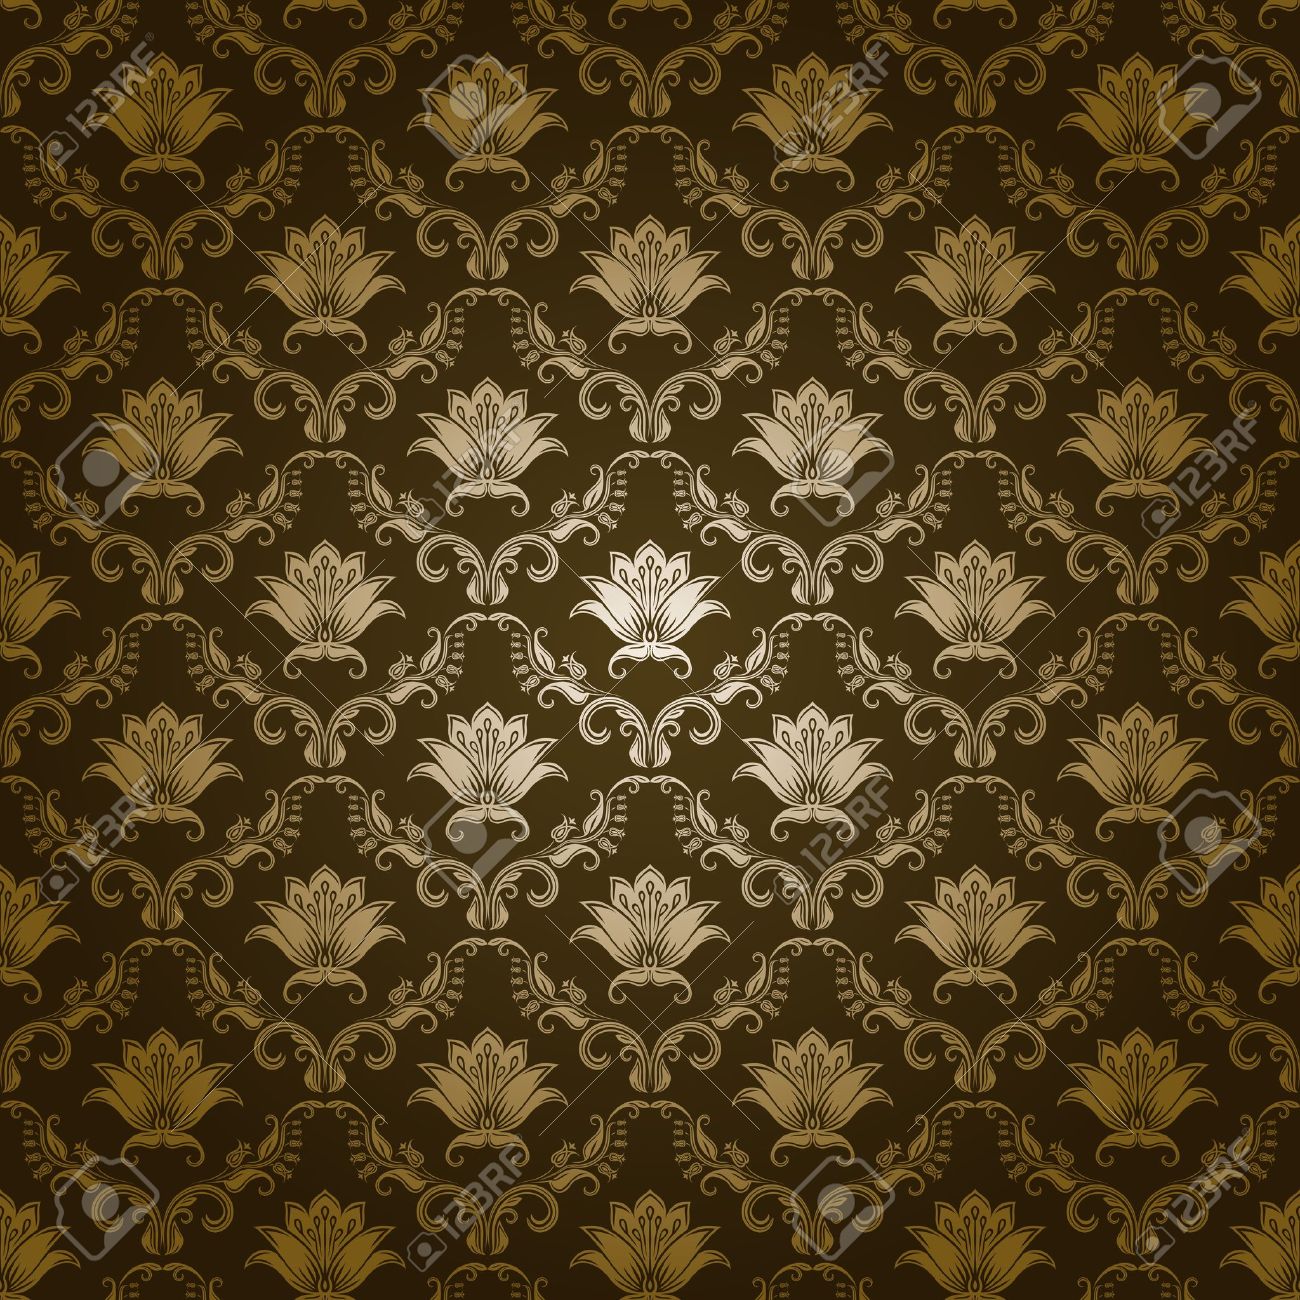 Royal Wallpaper Texture